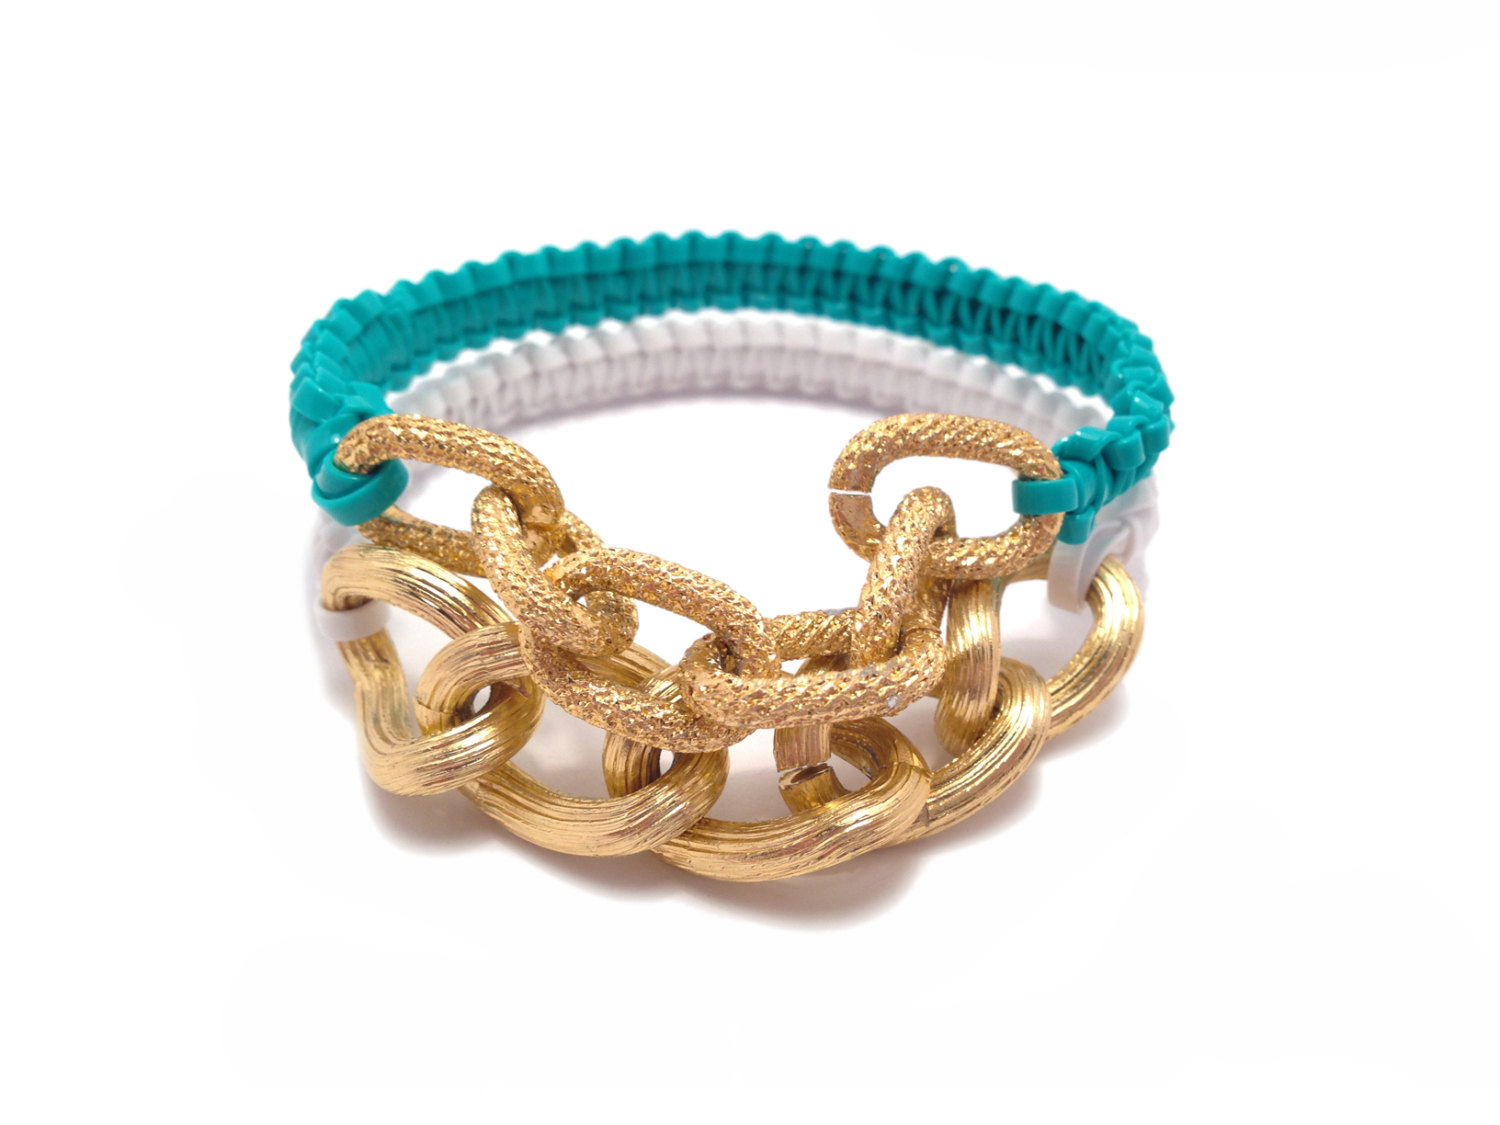 Plastic Lace Bracelet Turquoise And Gold Chain Bracelet